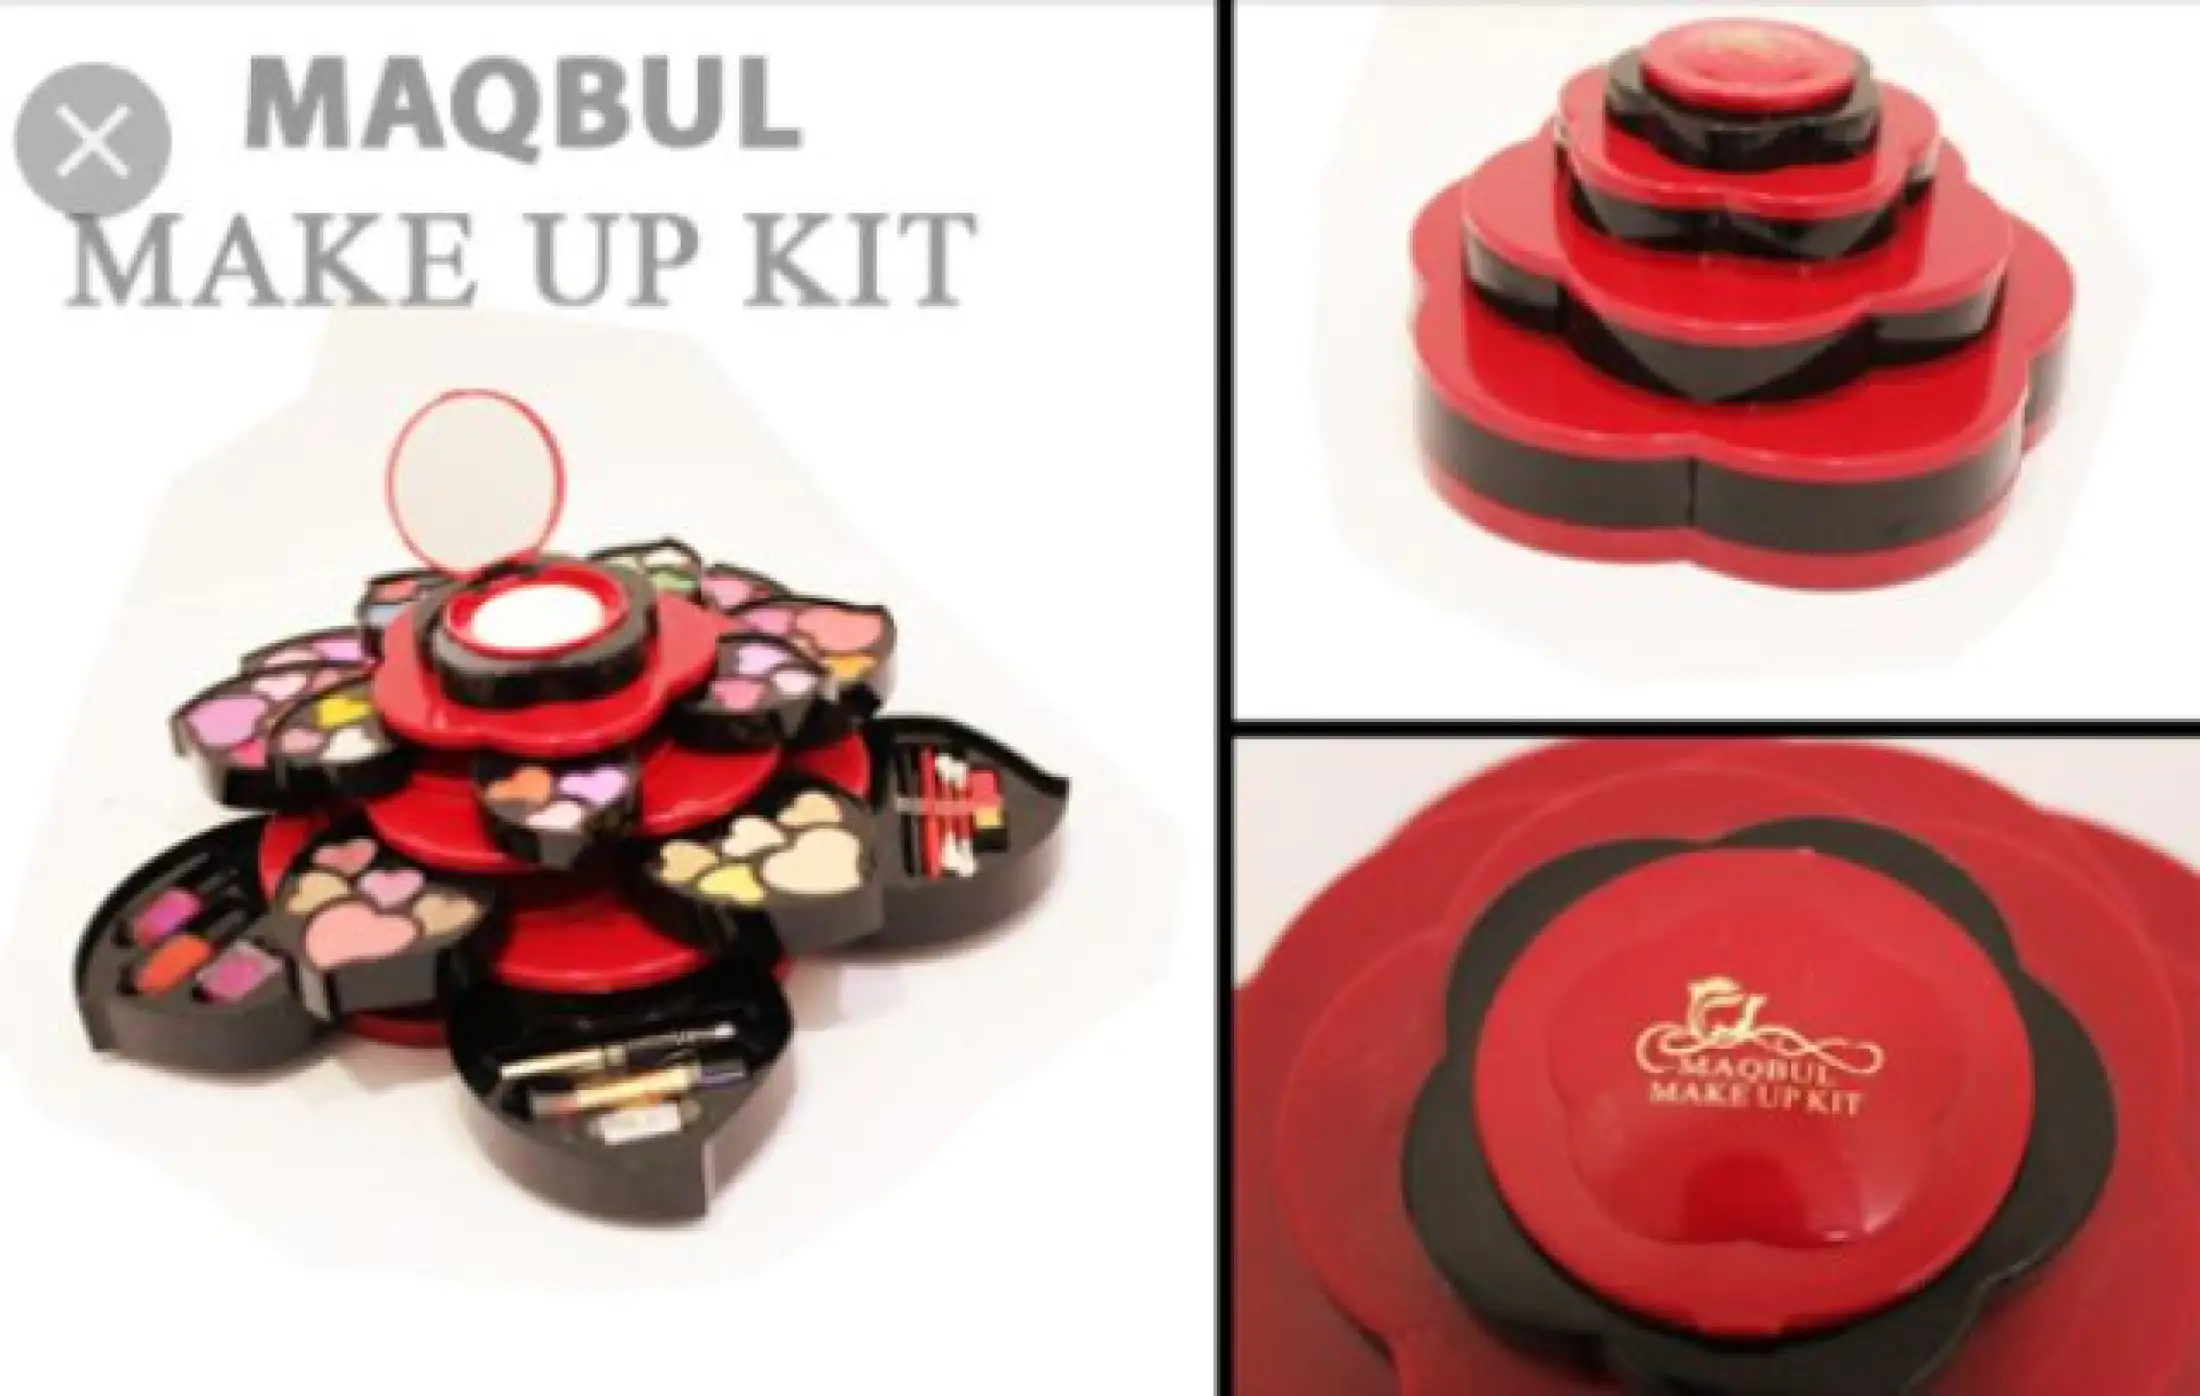 New Maqbul Make Up Kit Promotional